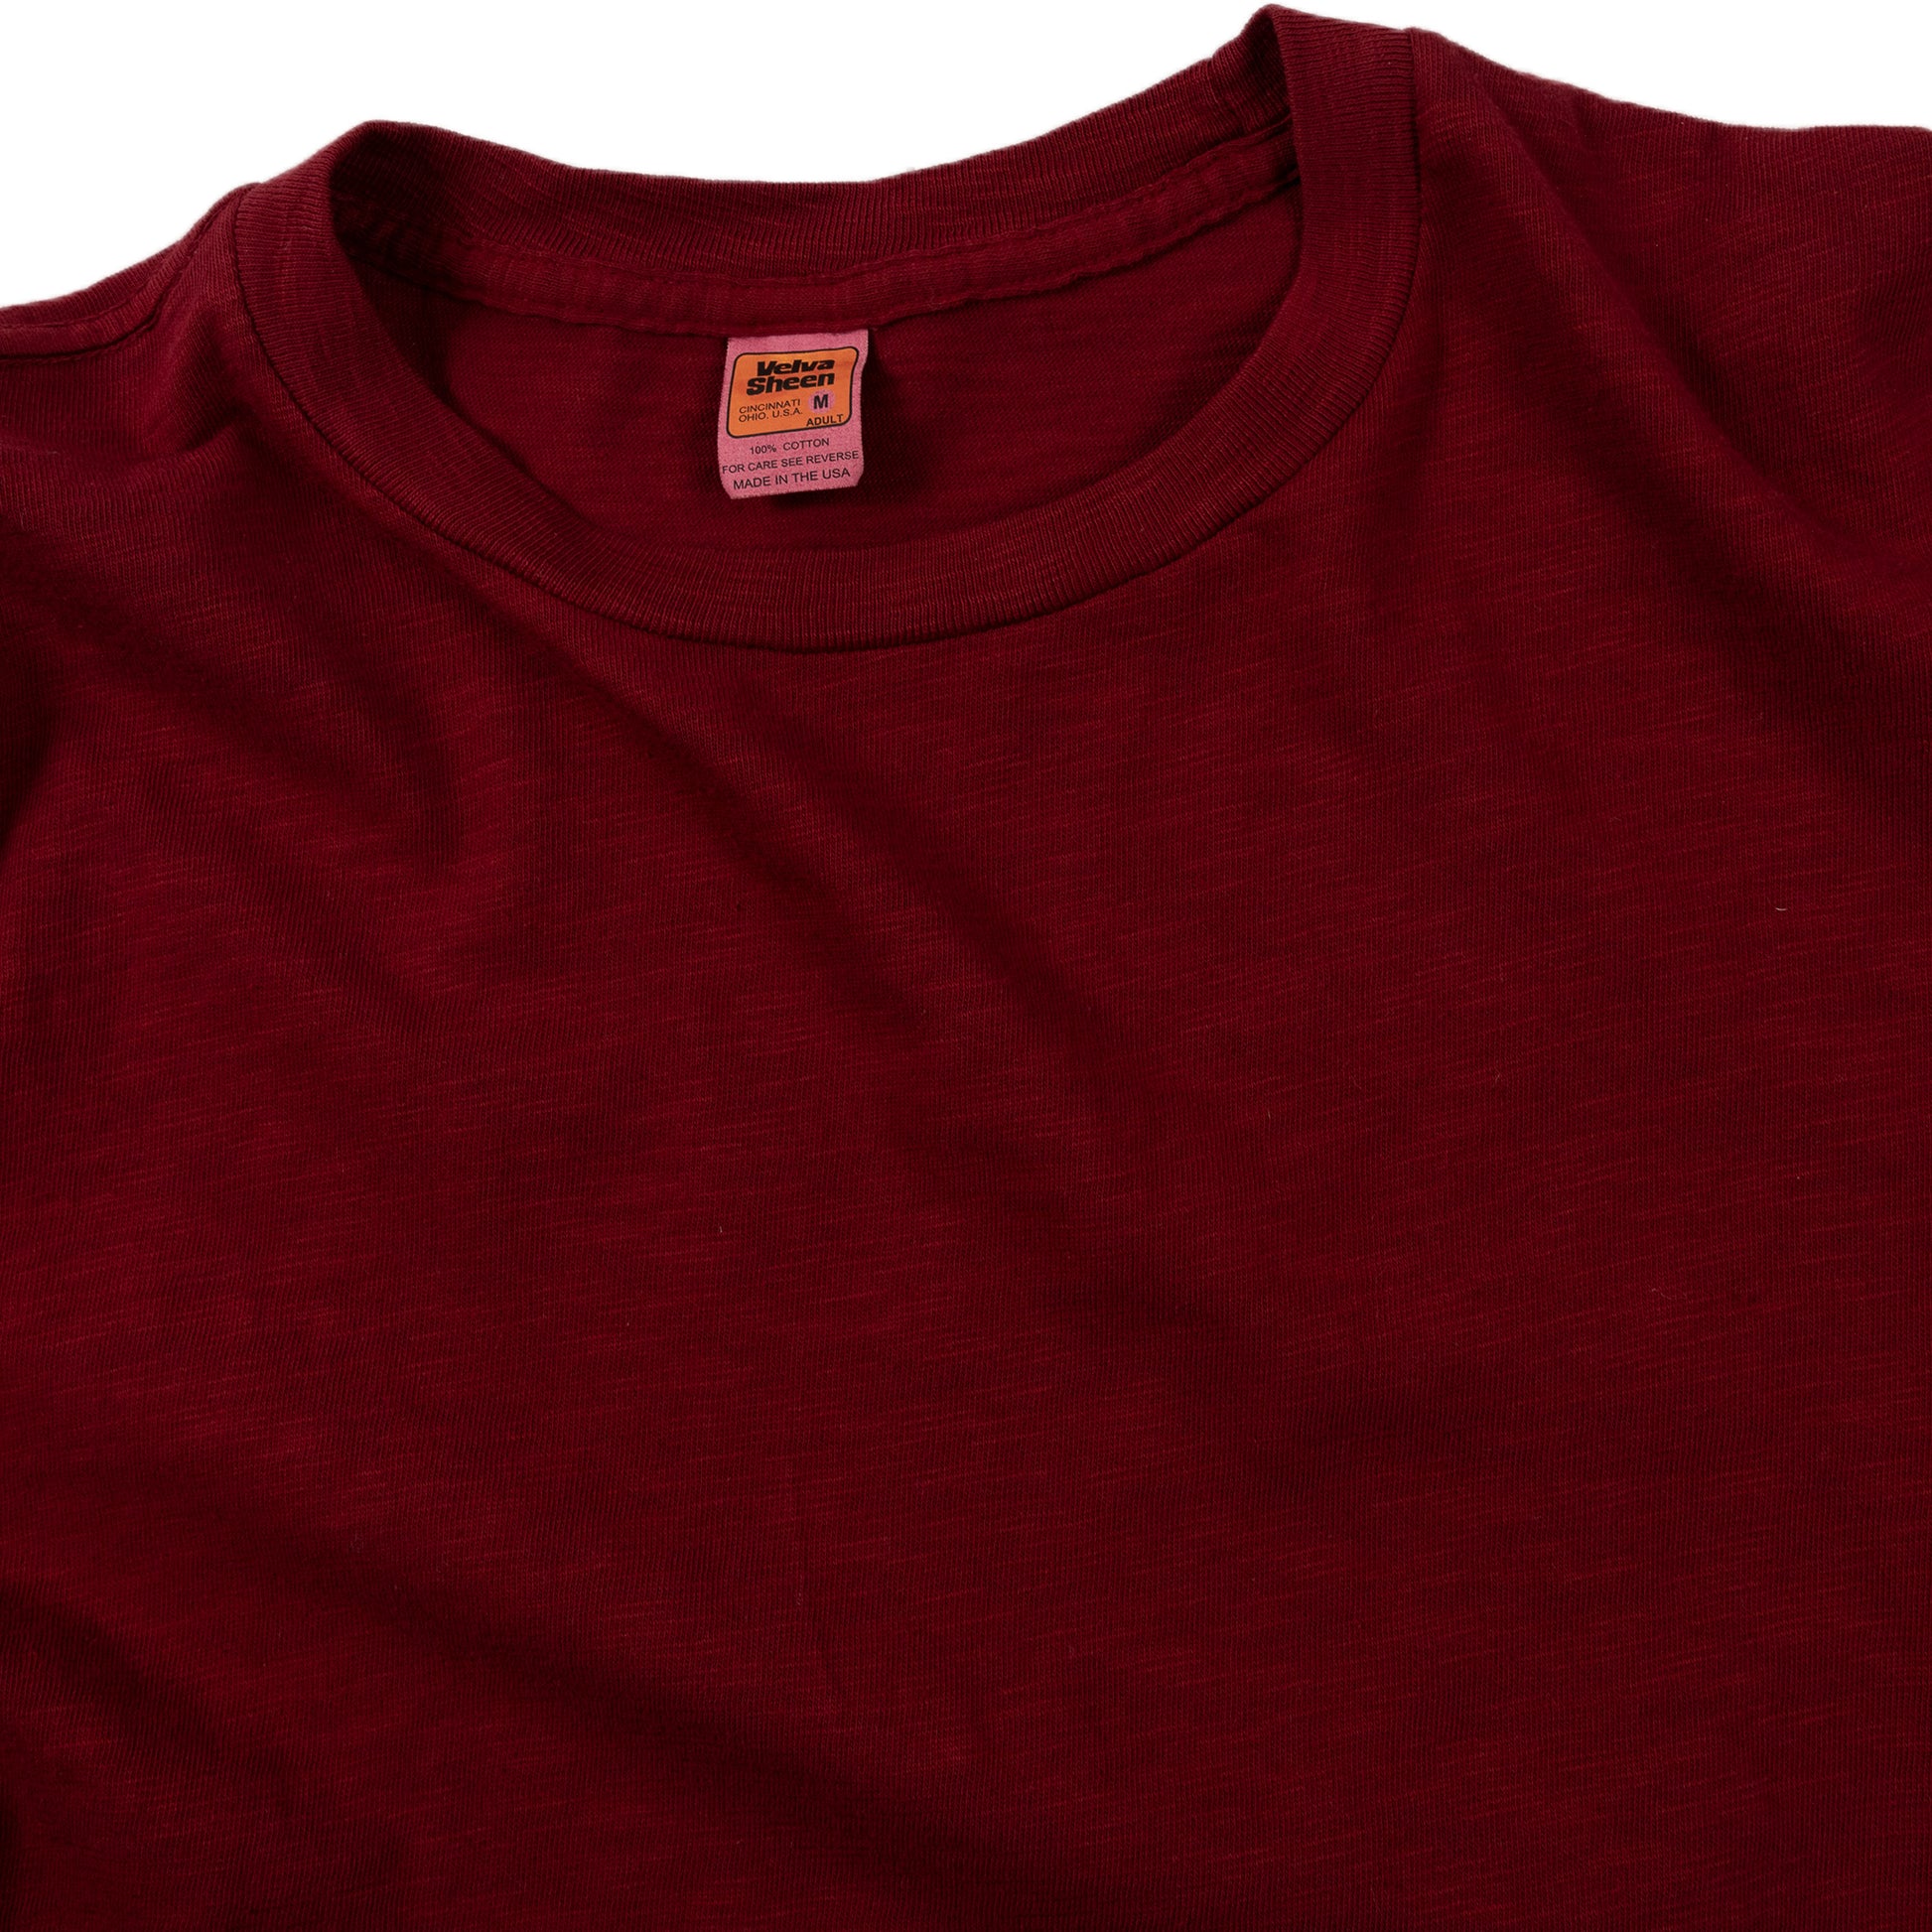 Velva Sheen Regular Short Sleeve Tee Shirt T-Shirt Burgundy Collar